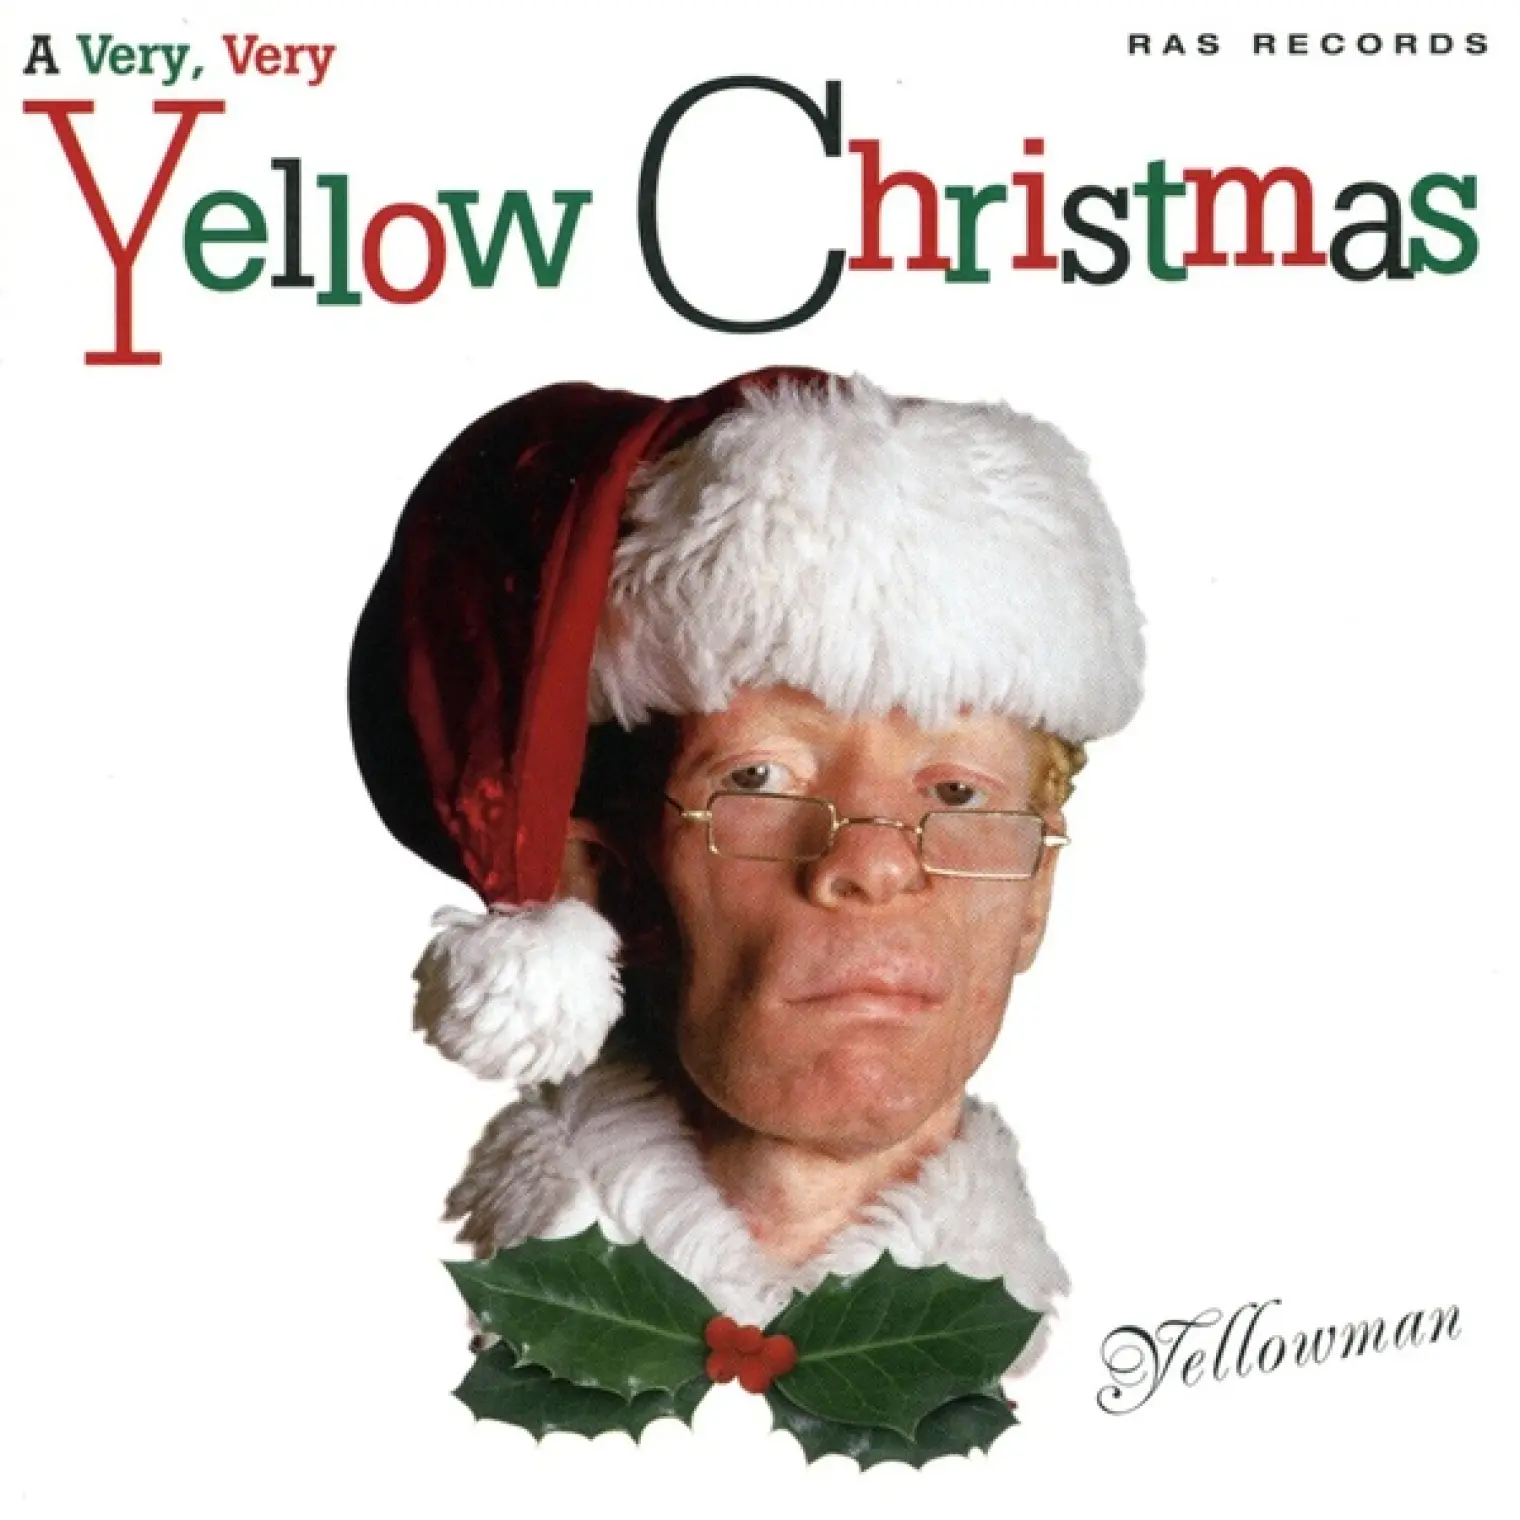 A Very, Very Yellow Christmas -  Yellowman 